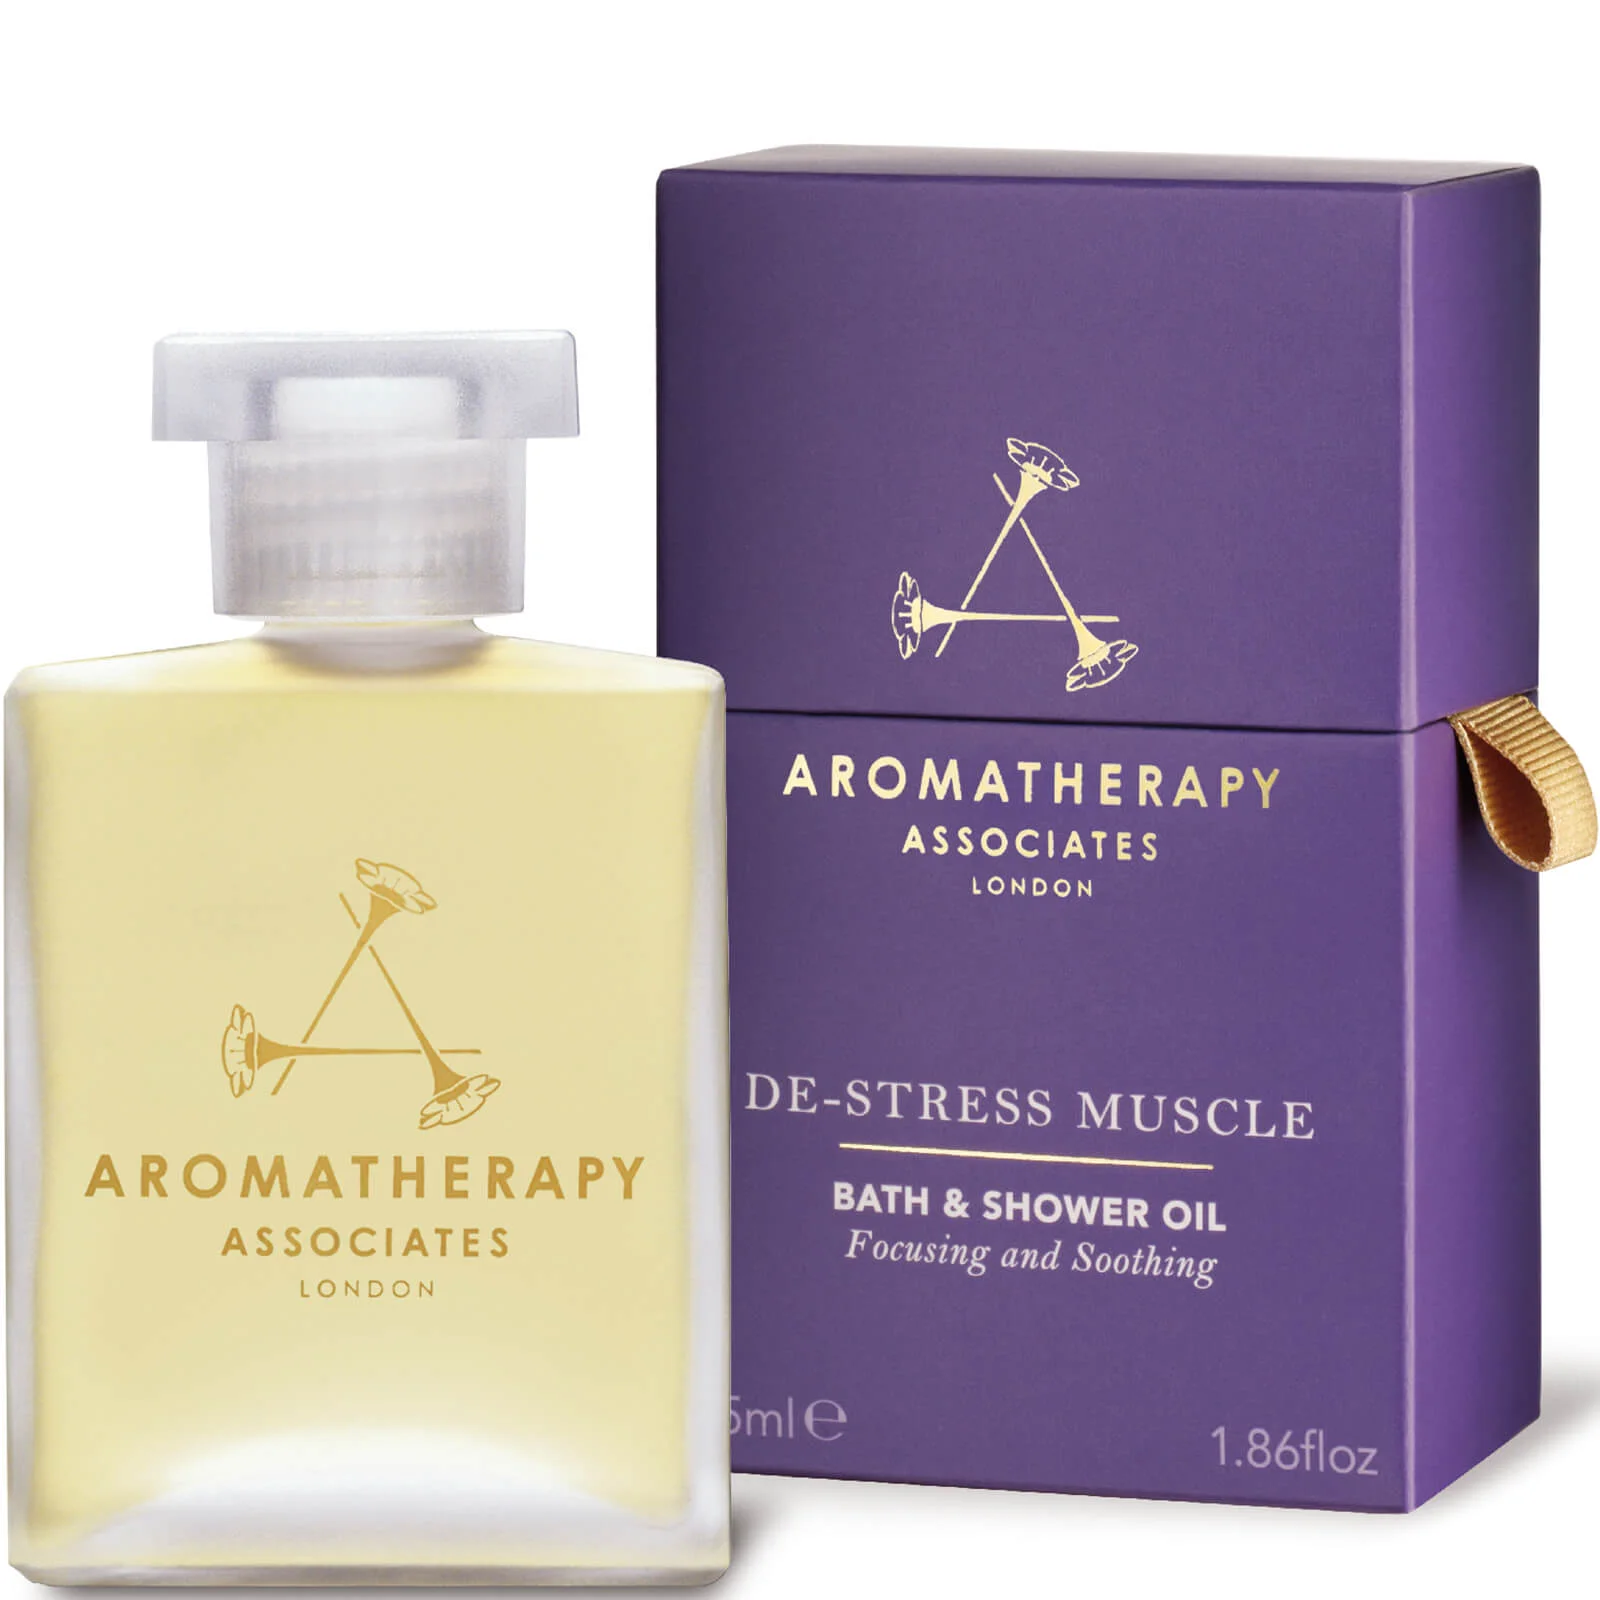 Aromatherapy Associates De-Stress Muscle Bath & Shower Oil 3ml Image 1